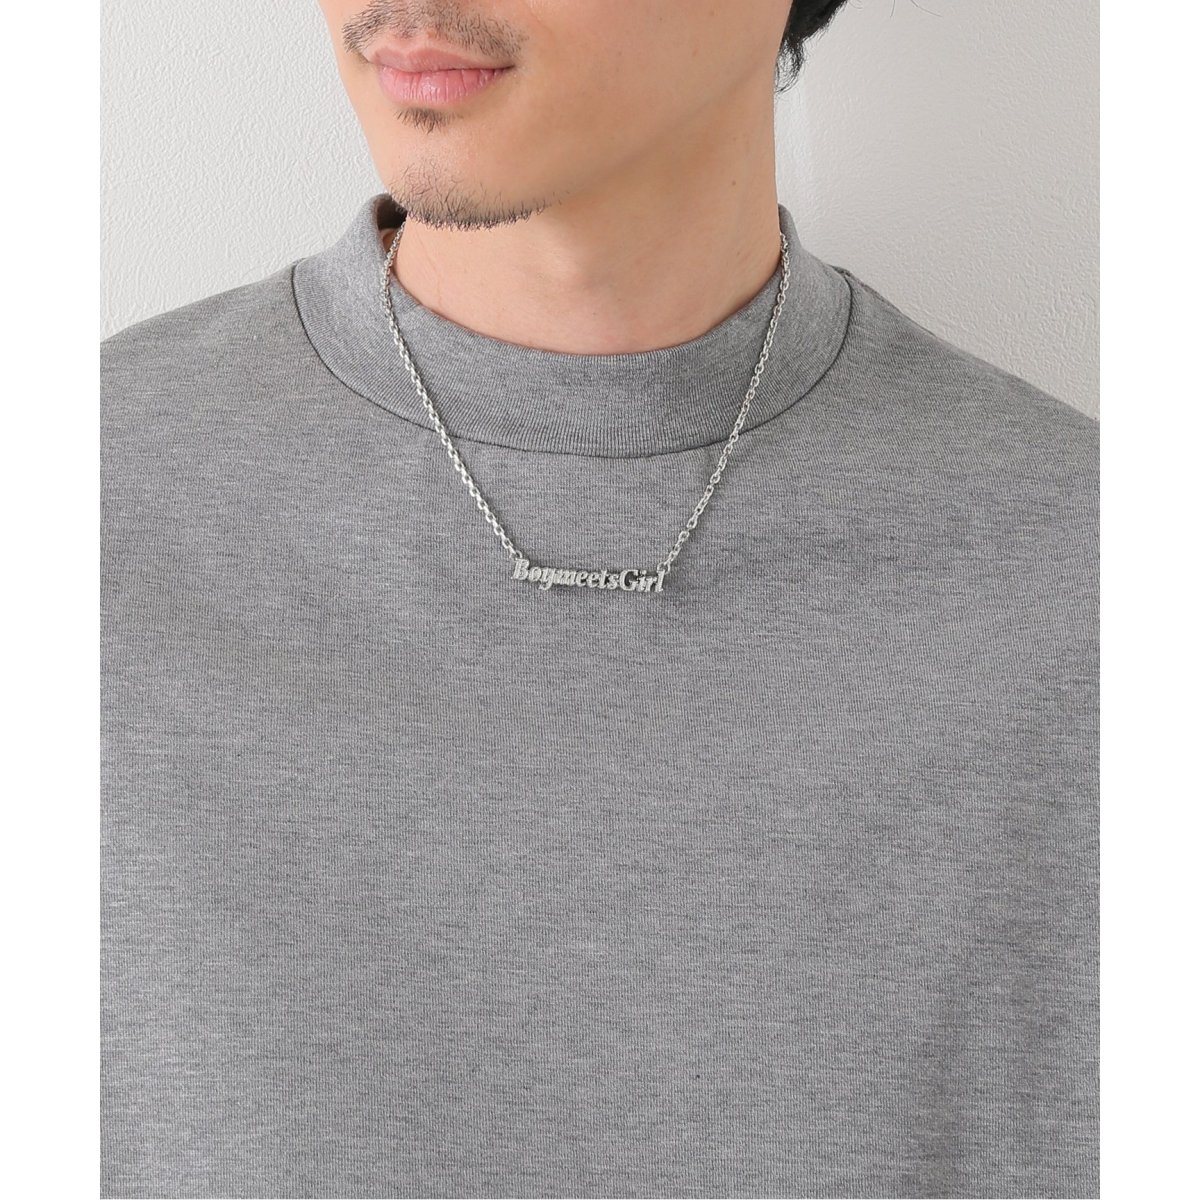 DAIRIKU 22ss ネックレス necklace-